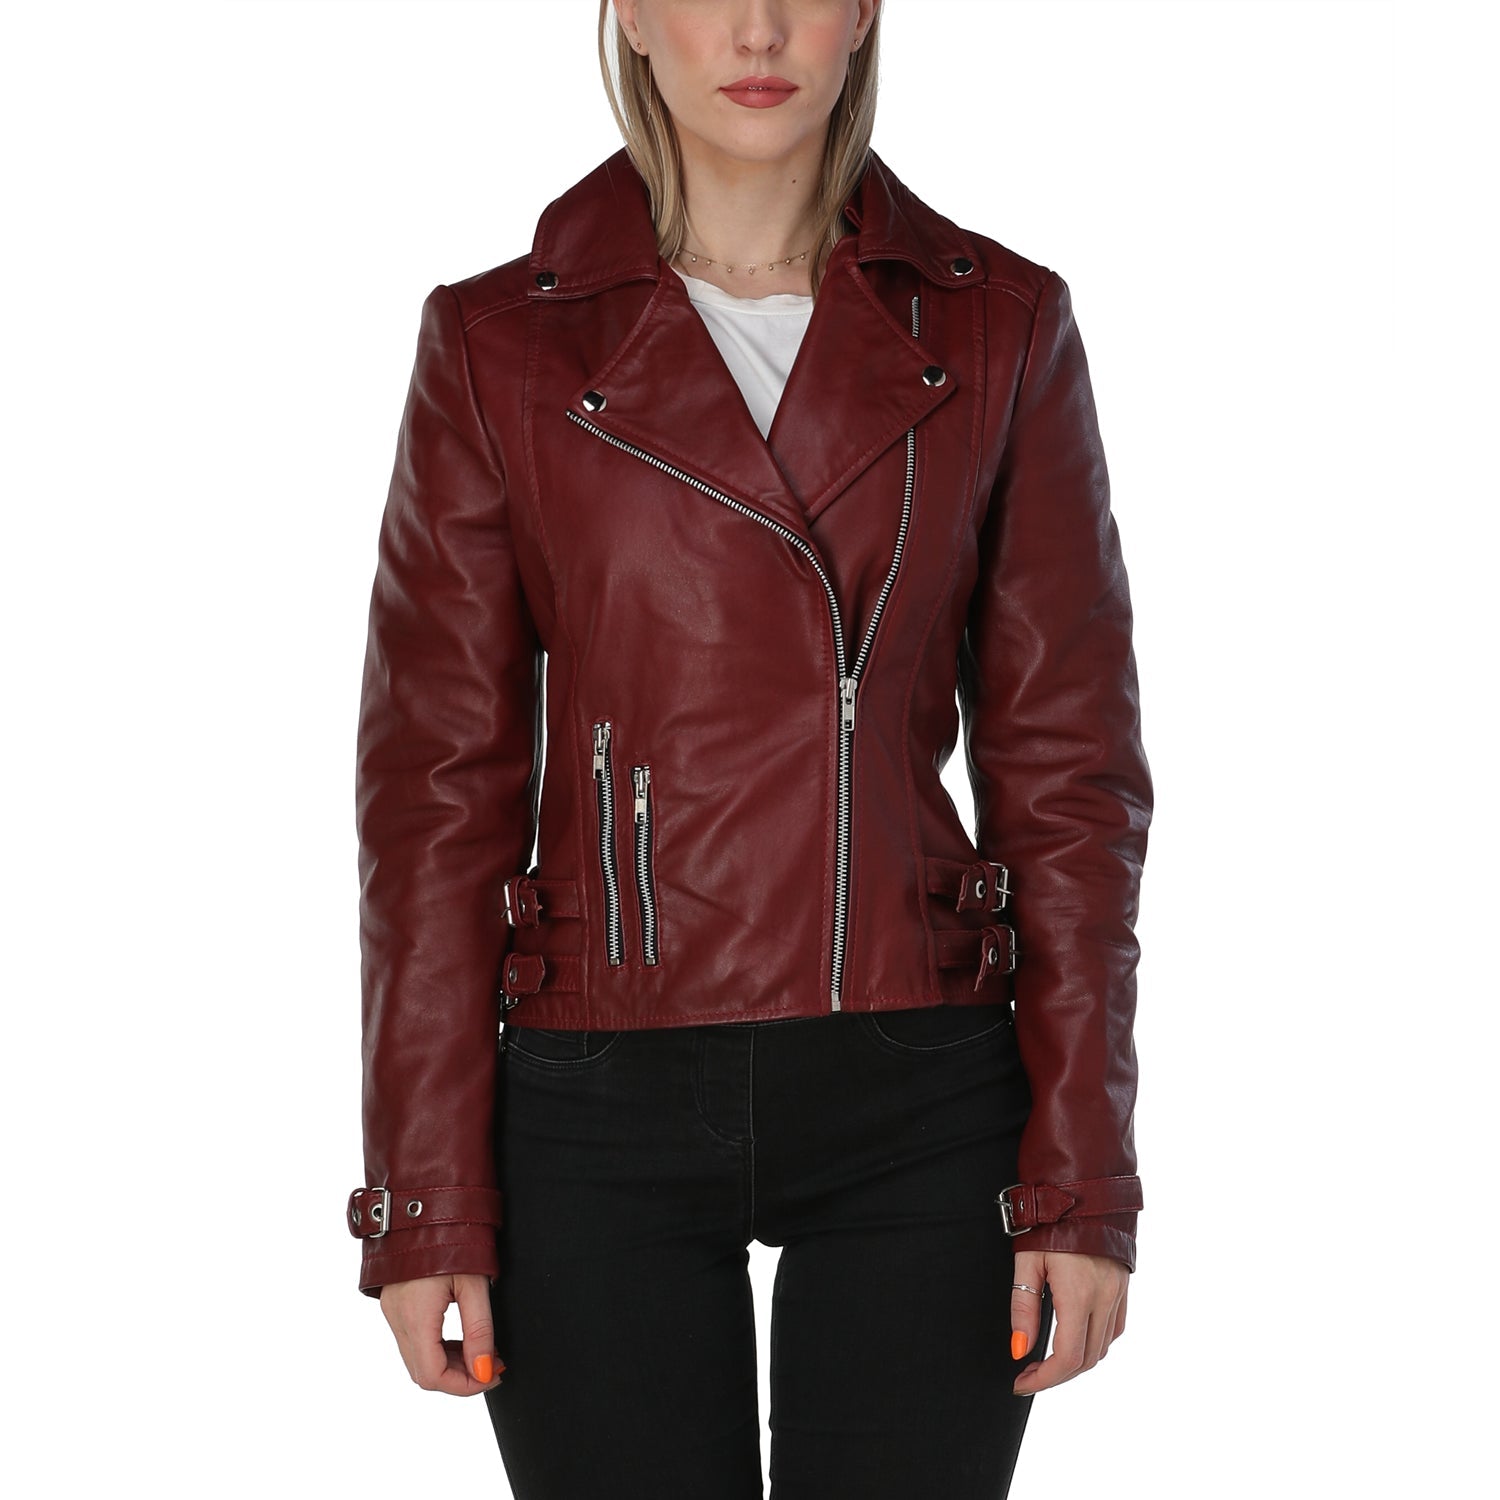 Plus size leather jacket women - Leather Skin Shop